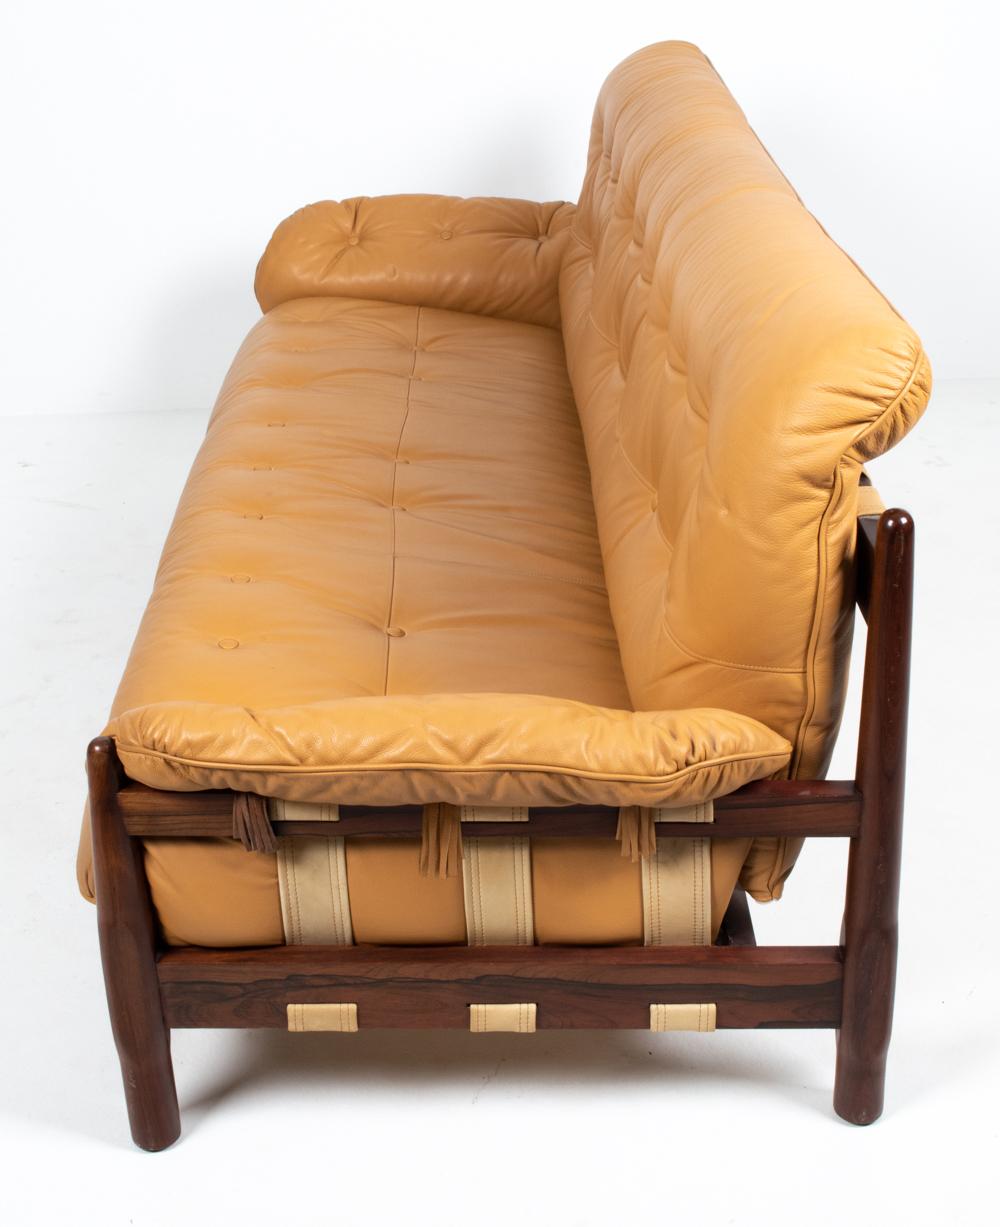 Brazilian Modernist Rosewood & Leather Sofa, circa 1970s For Sale 9